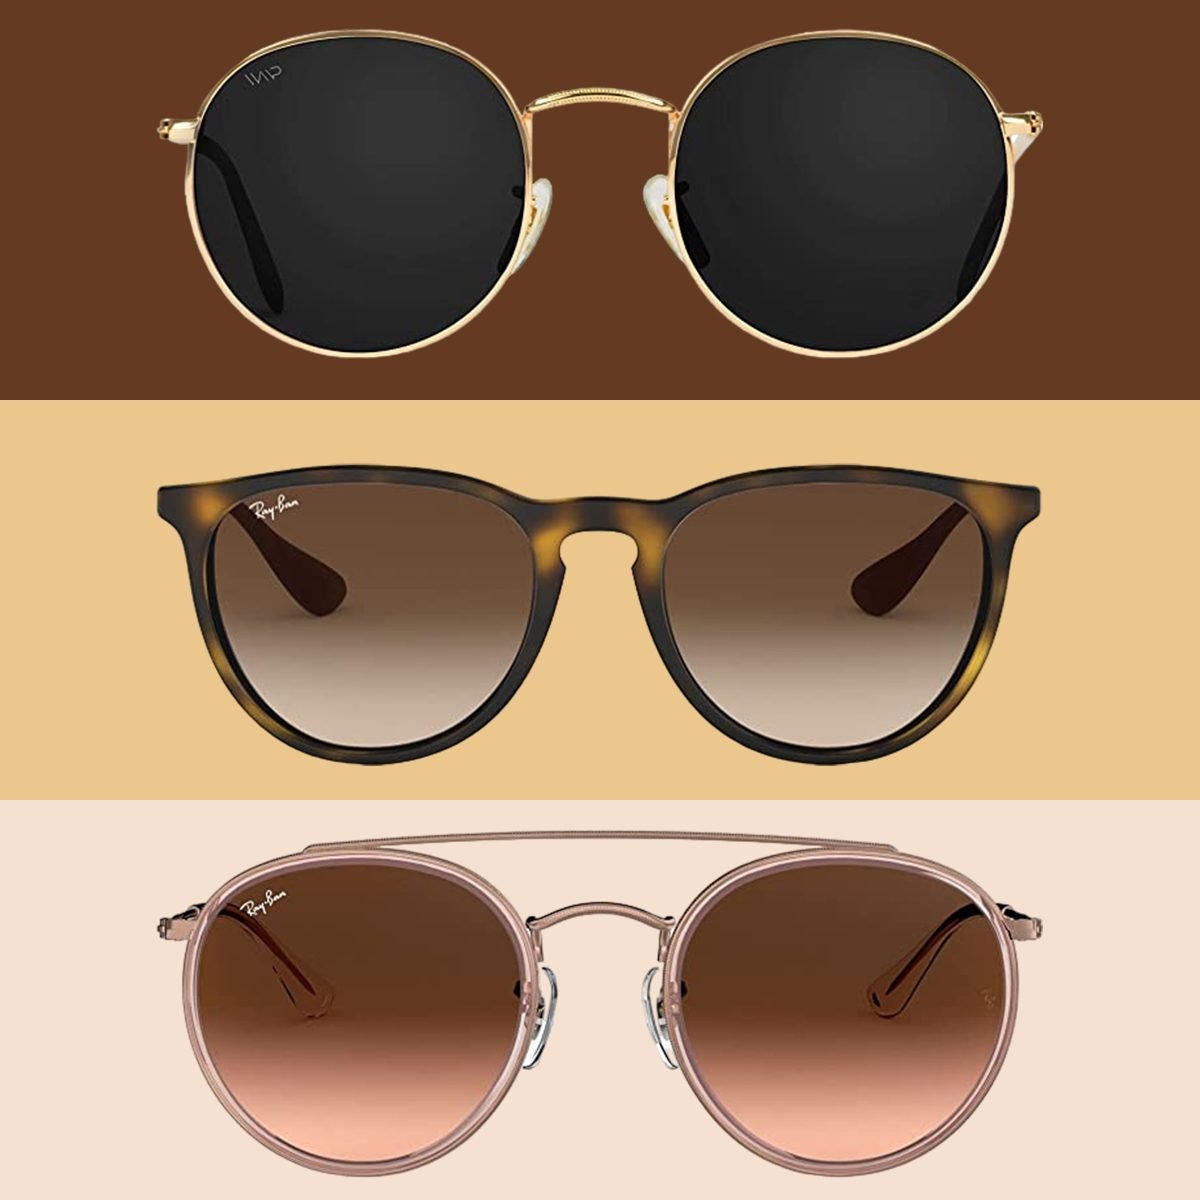 15 Amazon Sunglasses for Women: Oakley, Ray-Ban, Gucci and More